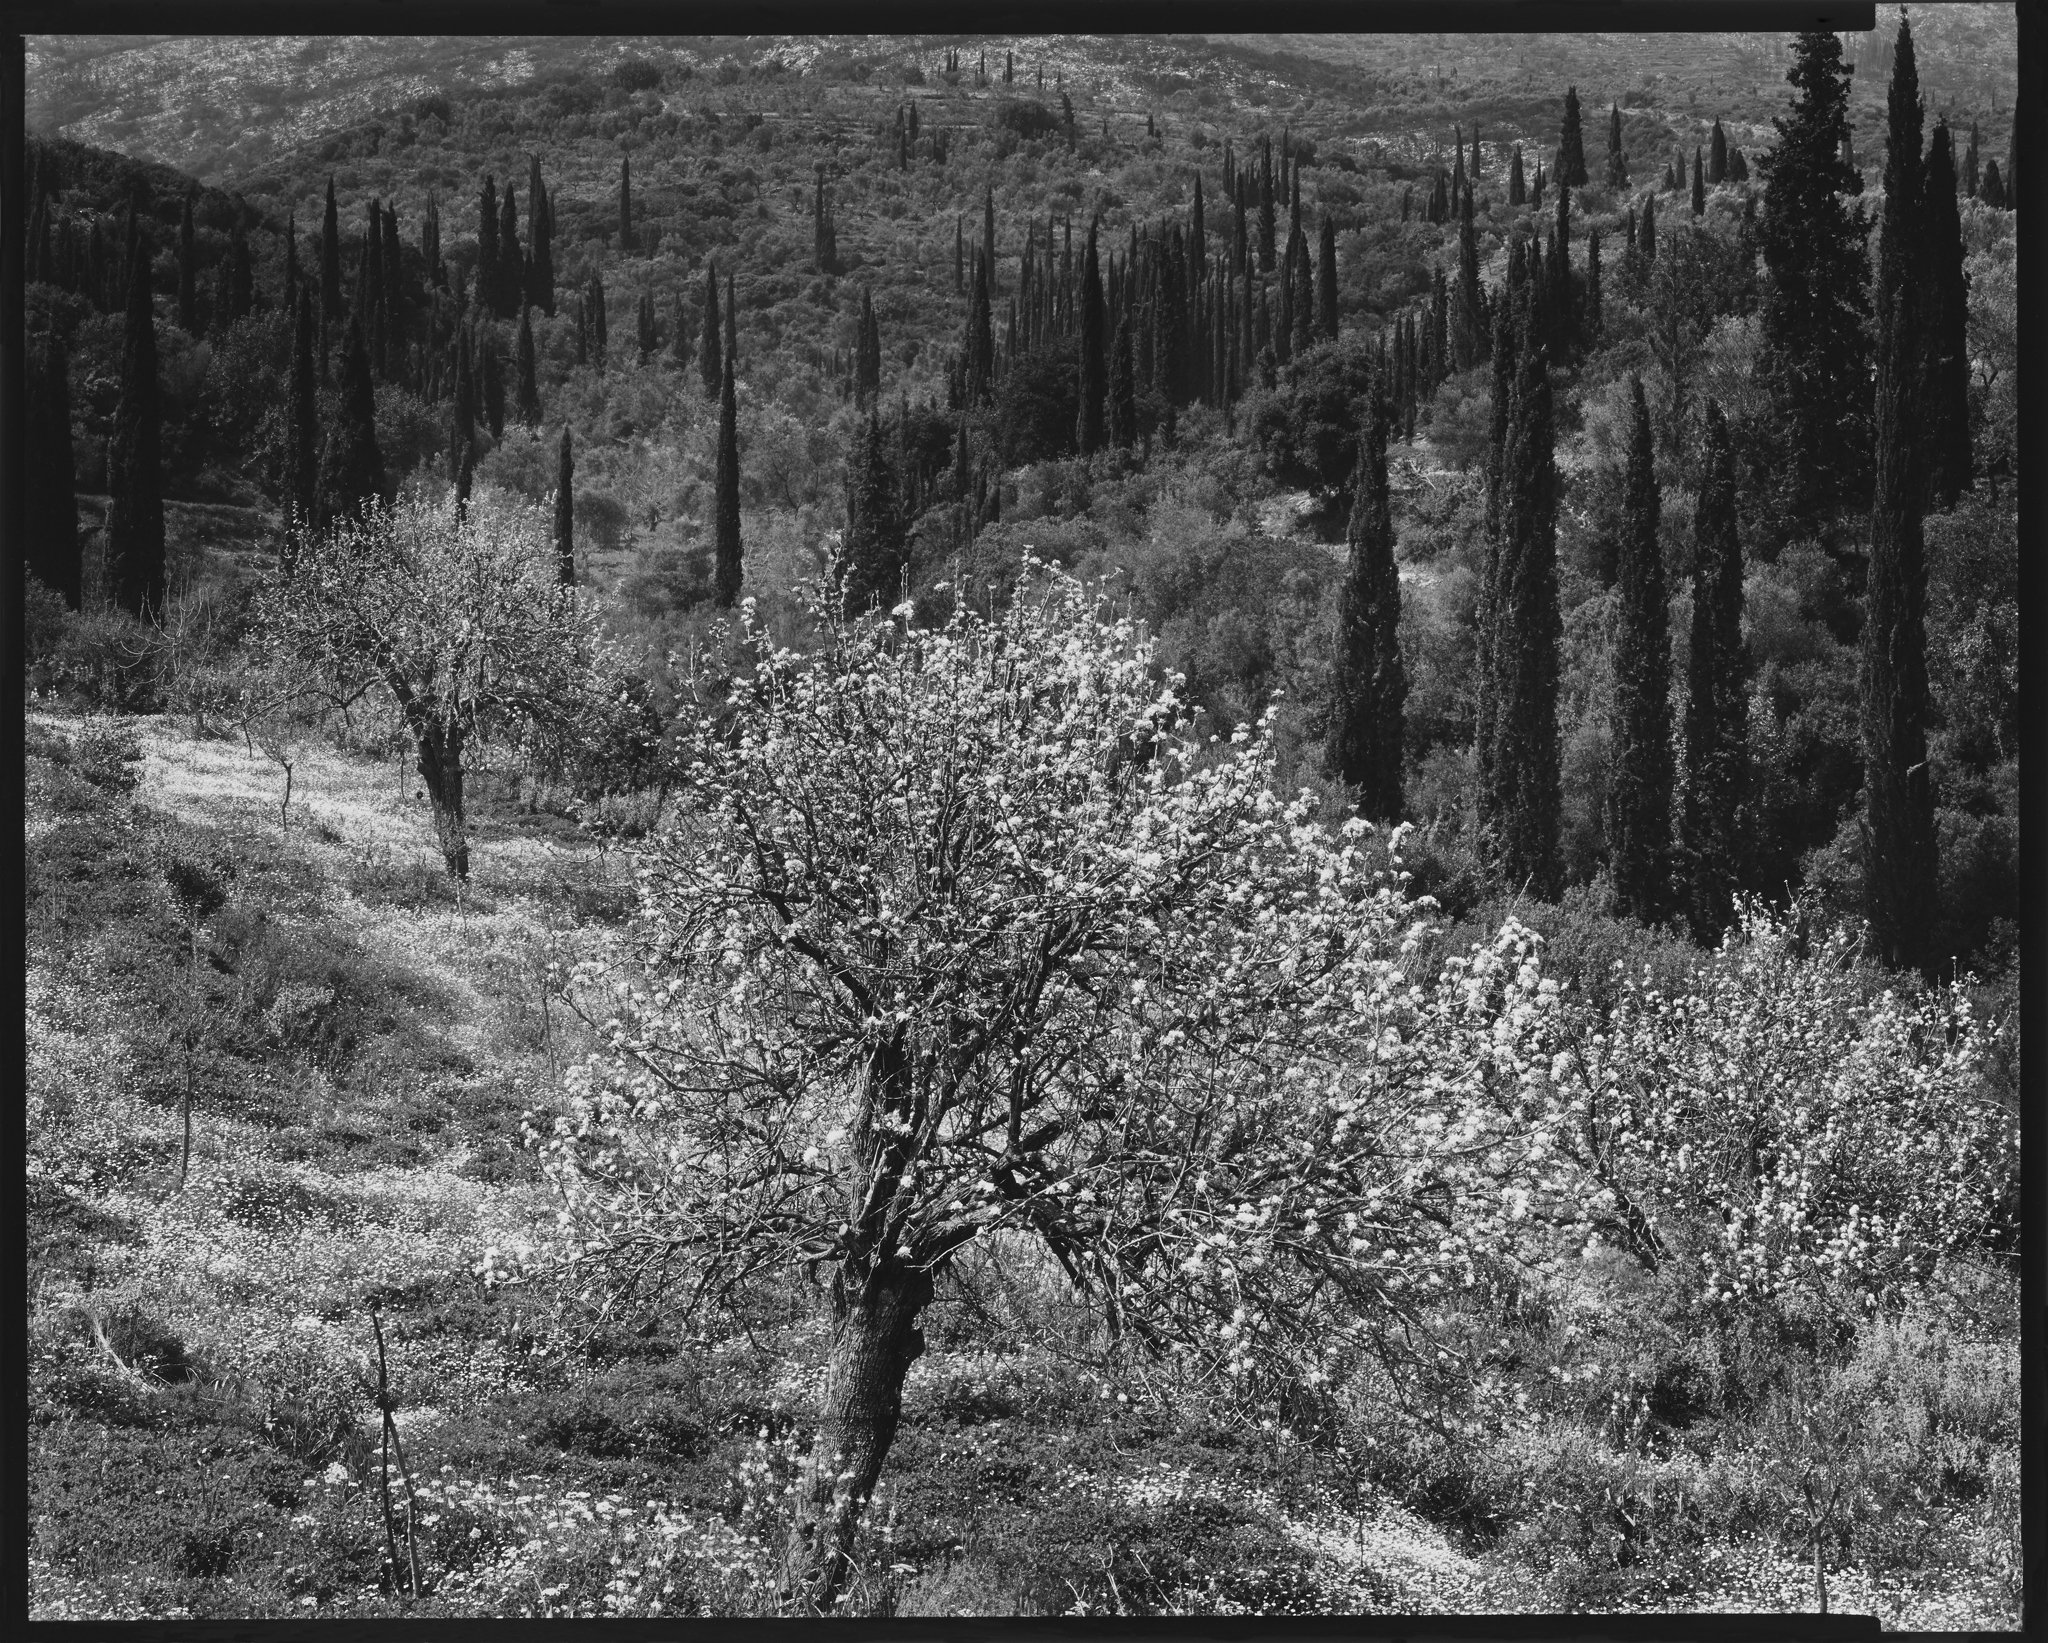 Greek Landscapes Portfolio_Orchard in Bloom, Mavromation, Greece_1982 © Nick Merrick.jpg